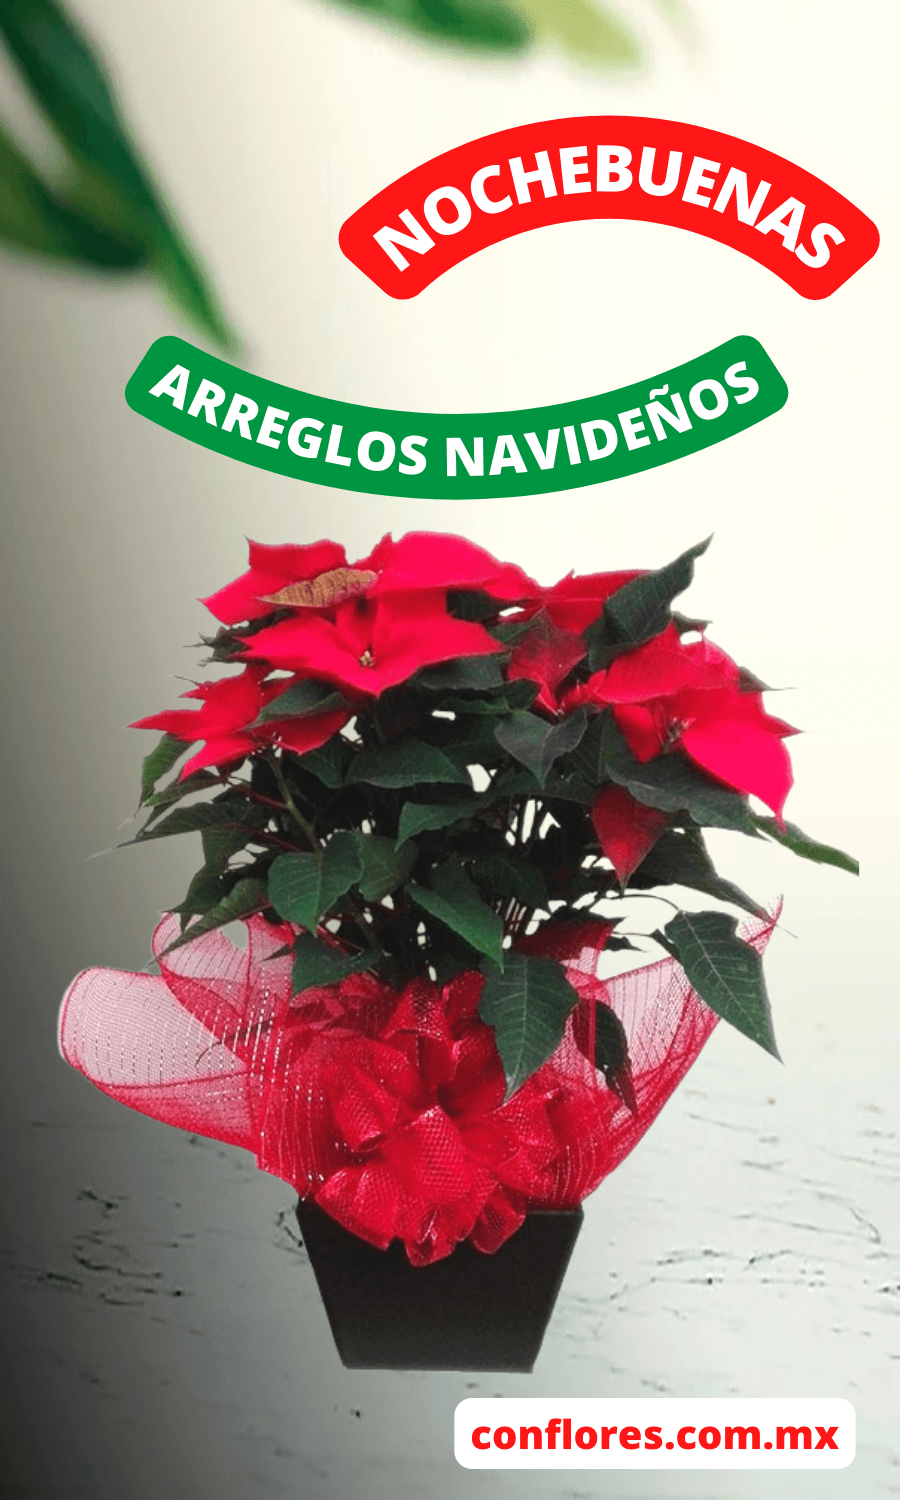 Arreglos Navideño con Nochebuena Navideña - Florería conflores